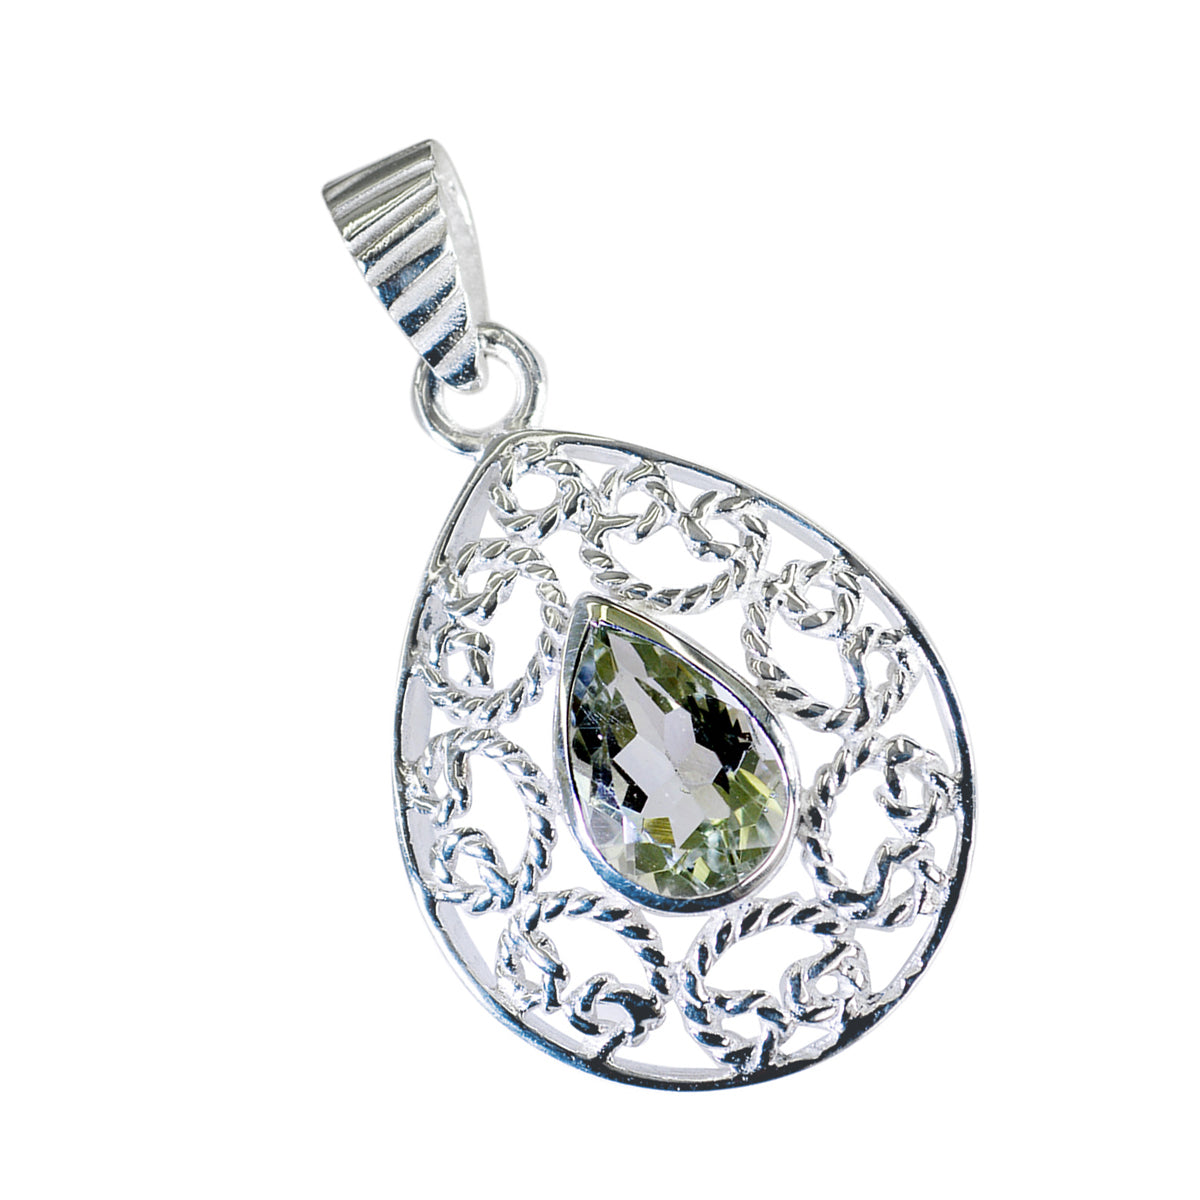 Riyo Good Gemstone Pear Faceted Green Green Amethyst Sterling Silver Pendant Gift For Friend